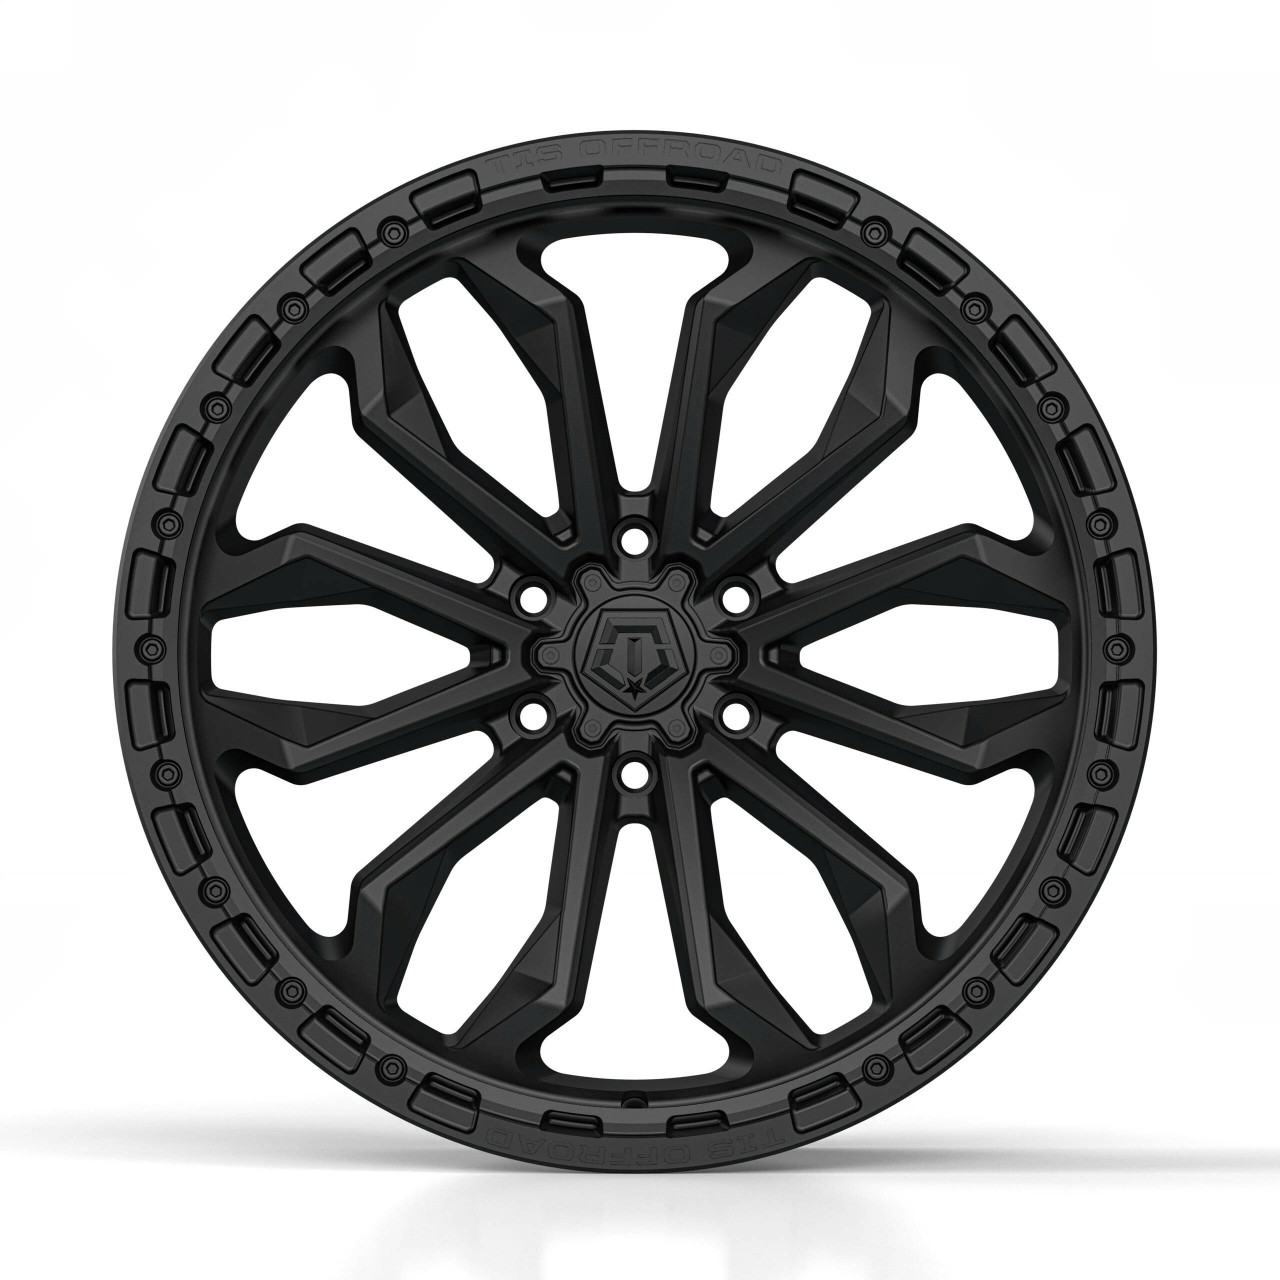 Set 4 20" TIS 556SB Satin Black 20x9 Wheels 6x5.5 18mm For Nissan Truck Rims